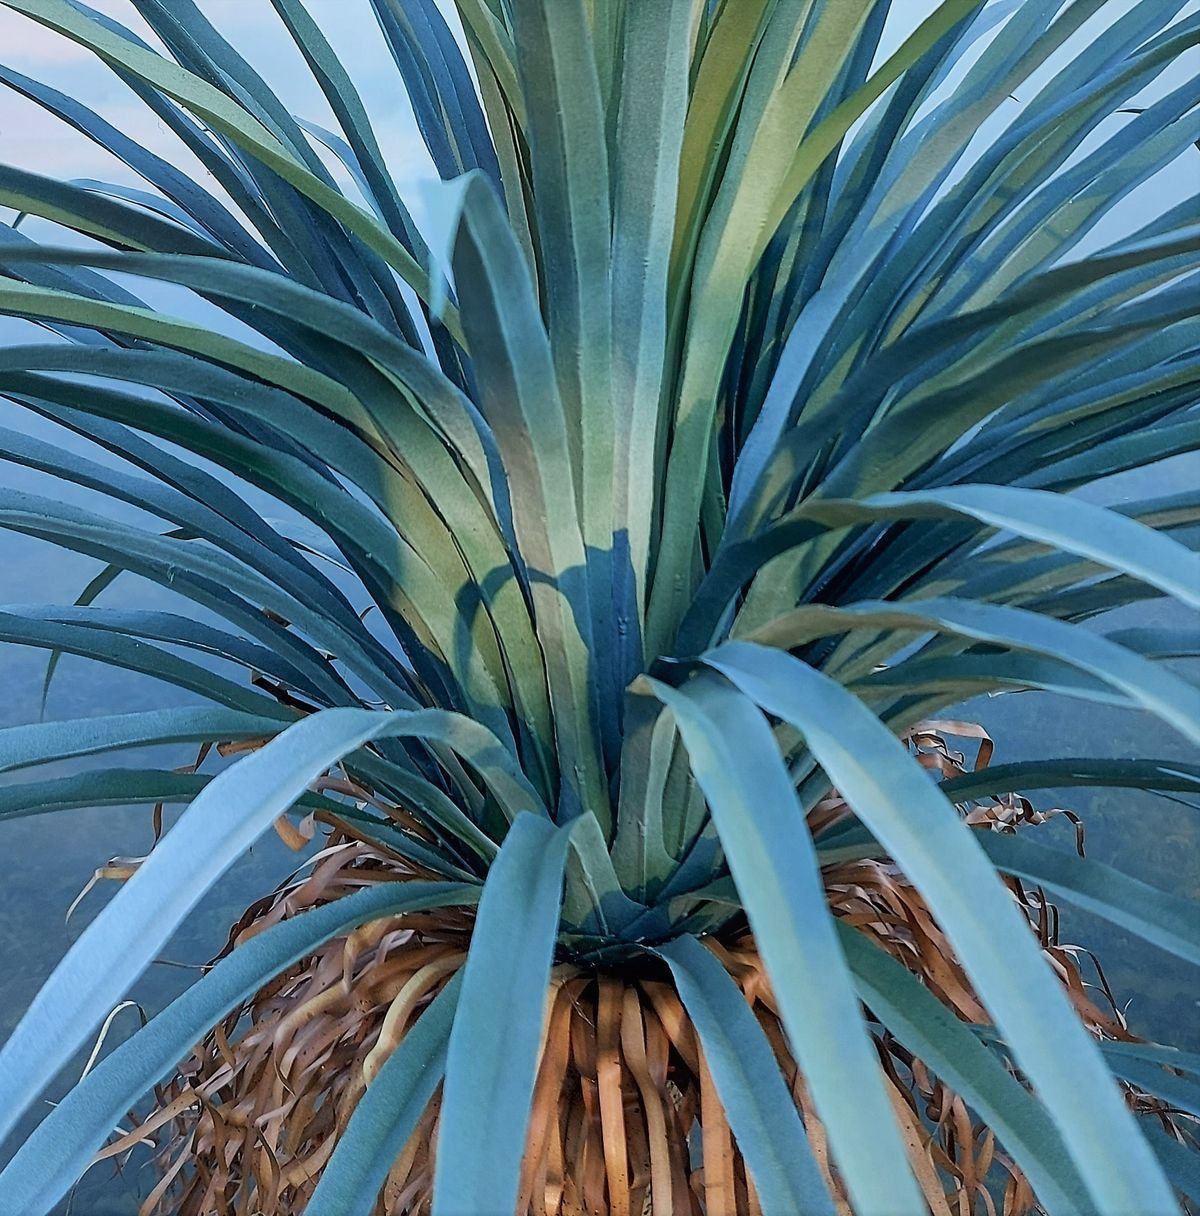 Künstliche Yuccapalme, getopft, 180 cm, grün-grau